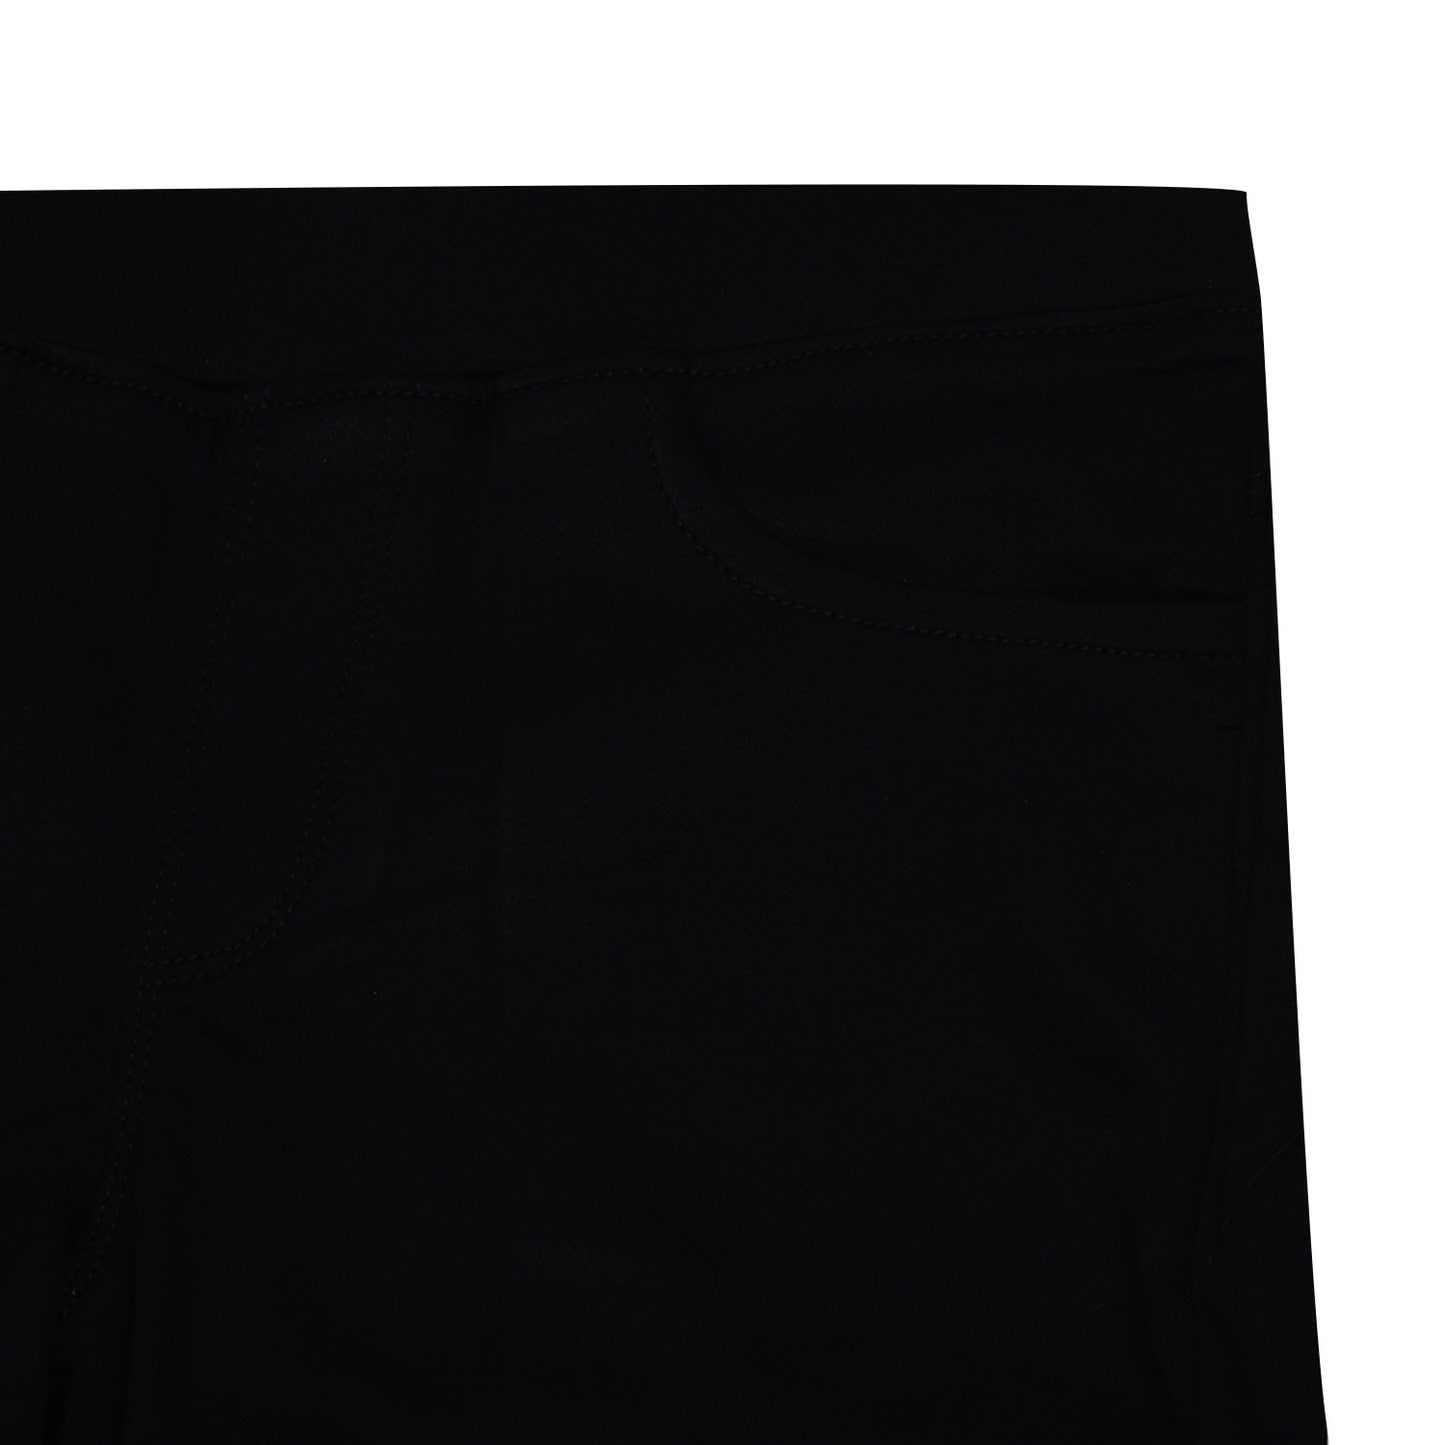 Women's Cotton jeggings with Slim Fit (Black) -  Wish Karo Dresses